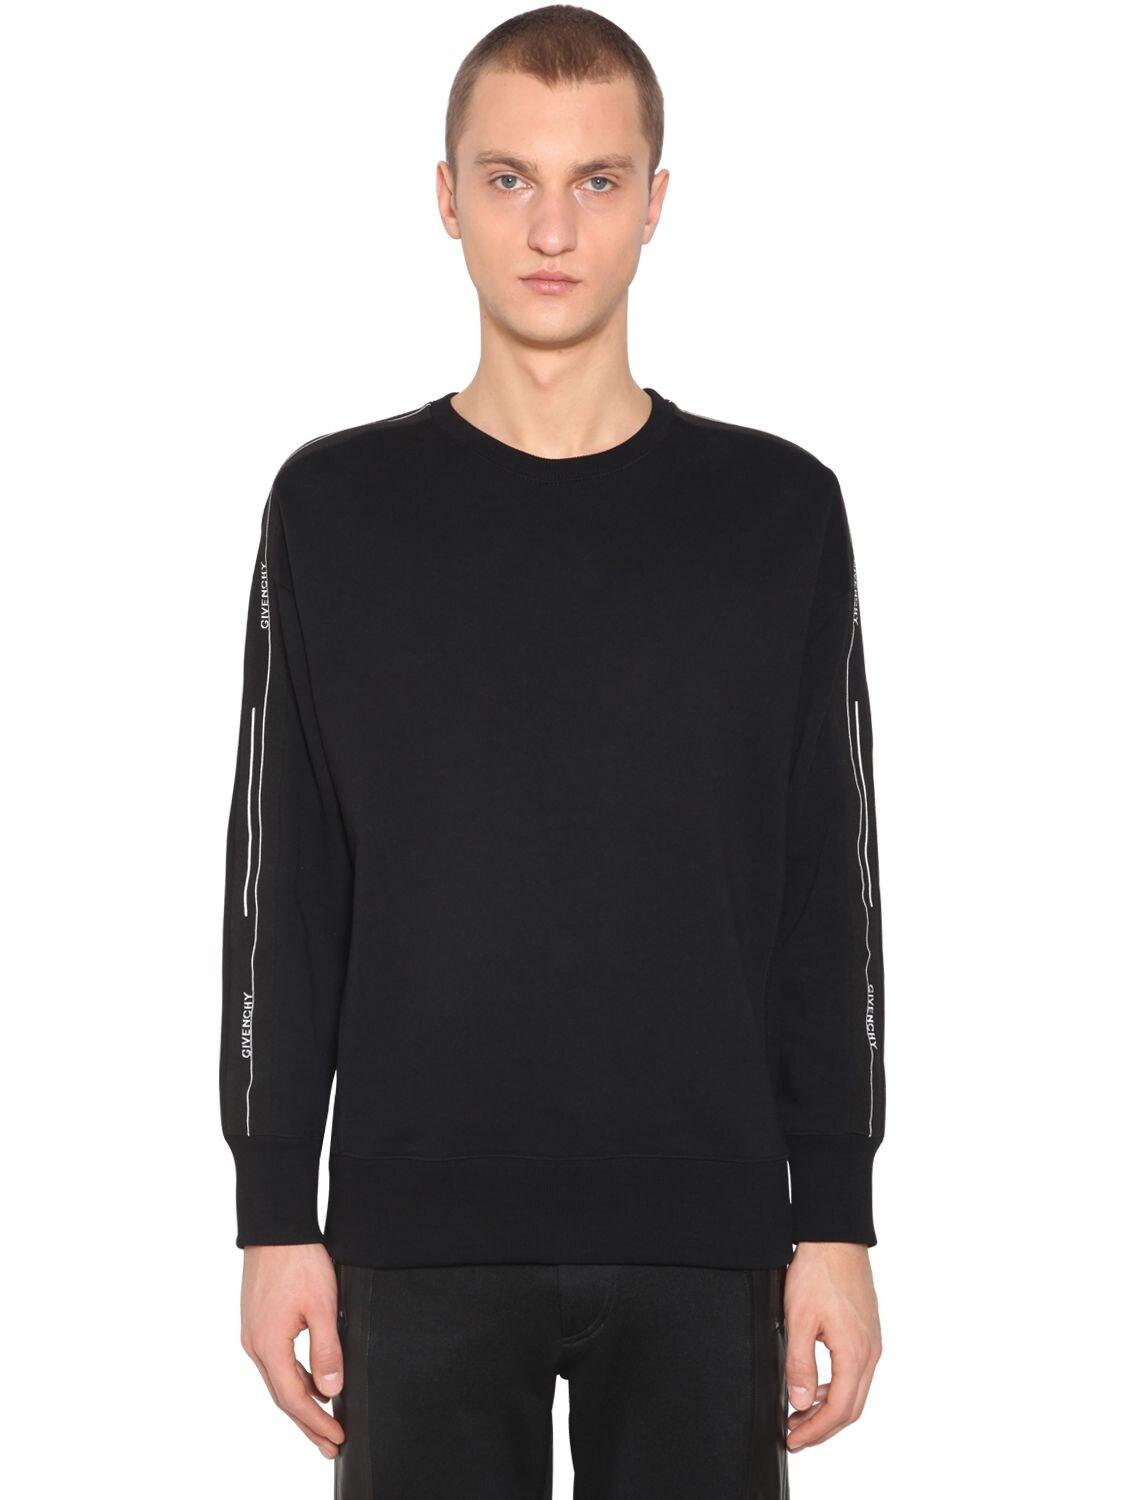 Givenchy Logo Tape Cotton Crewneck Sweatshirt in Black for Men - Lyst